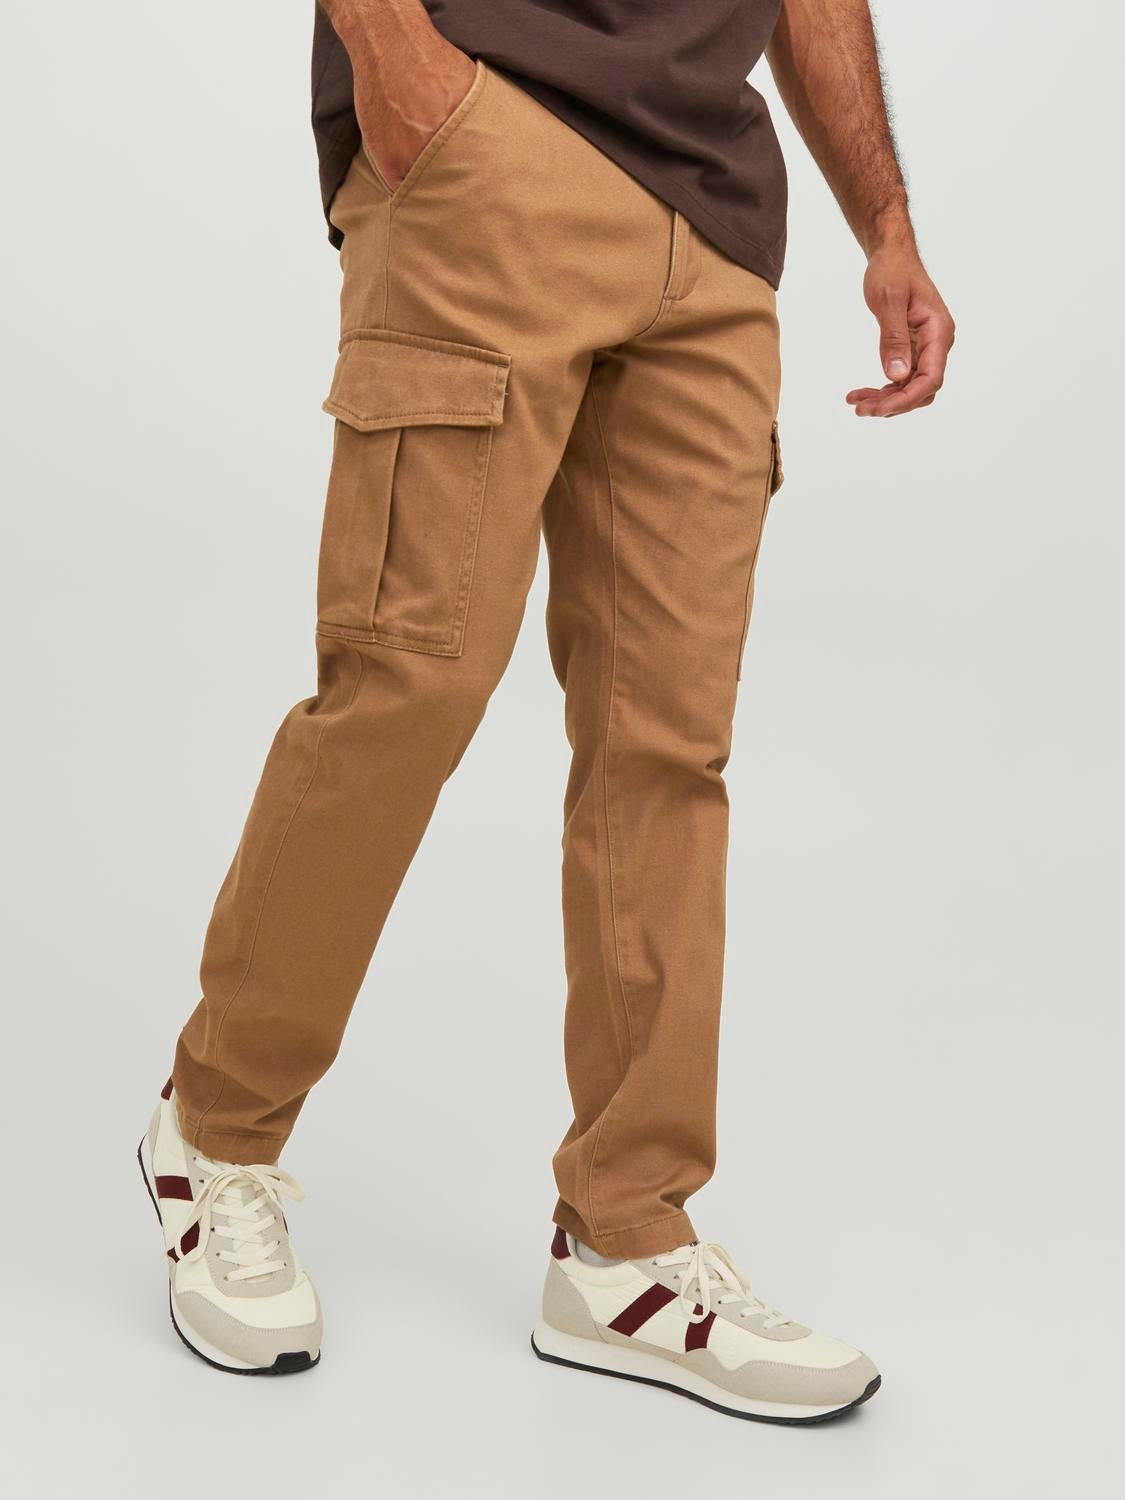 Buy MAGIC Premium Boy's Cotton Slim fit Cargo Trouser Pant 6 Pocket (Khaki,  30) at Amazon.in